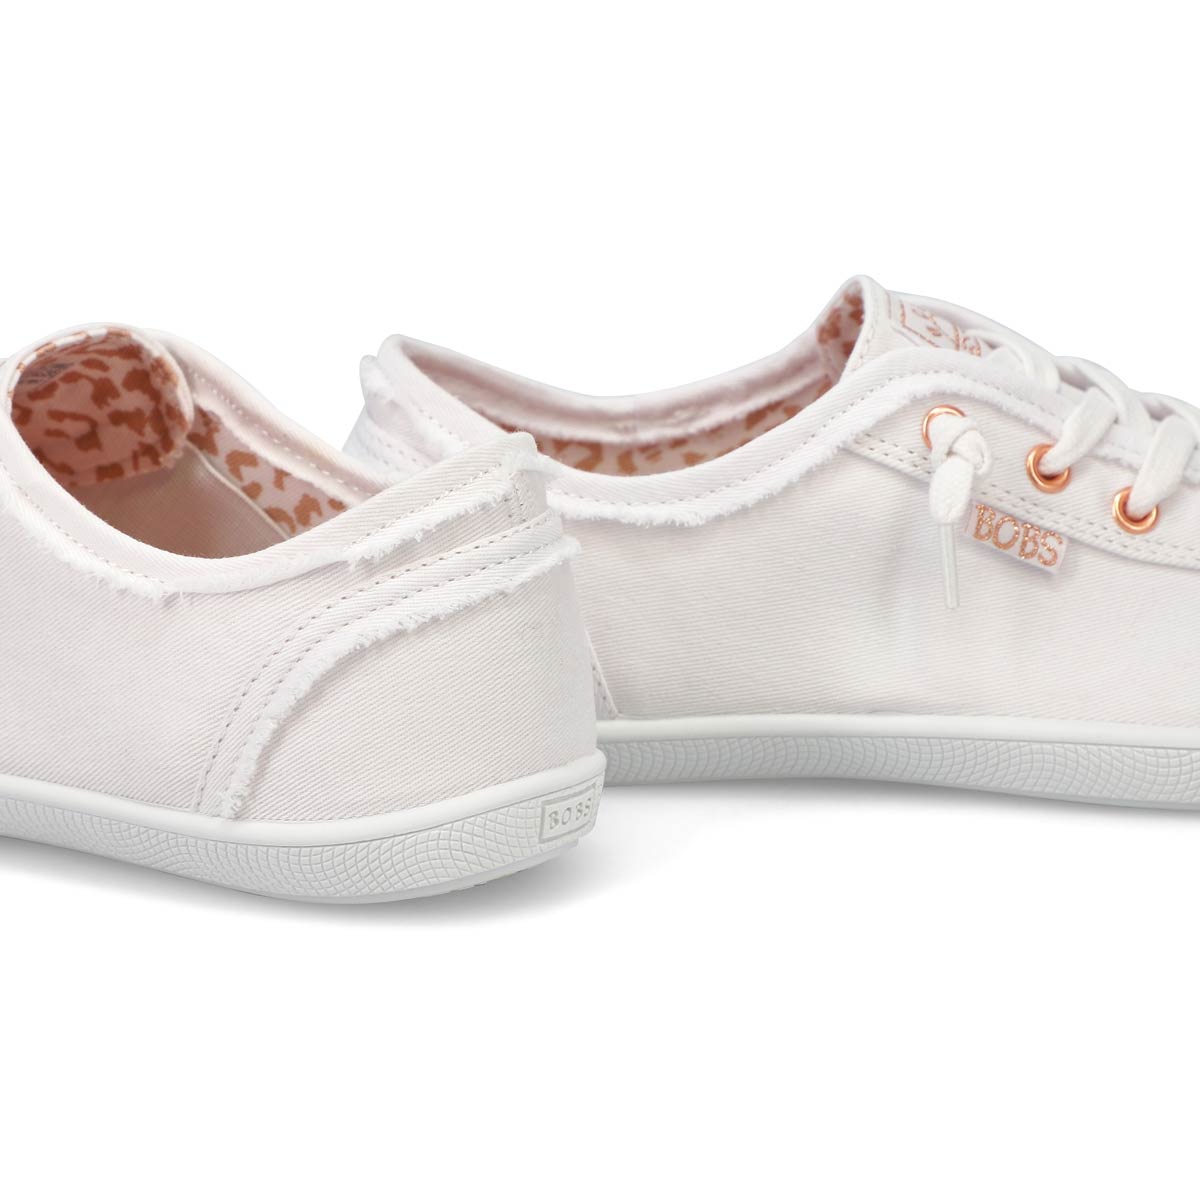 Womens' Bobs B Cute sneakers - white